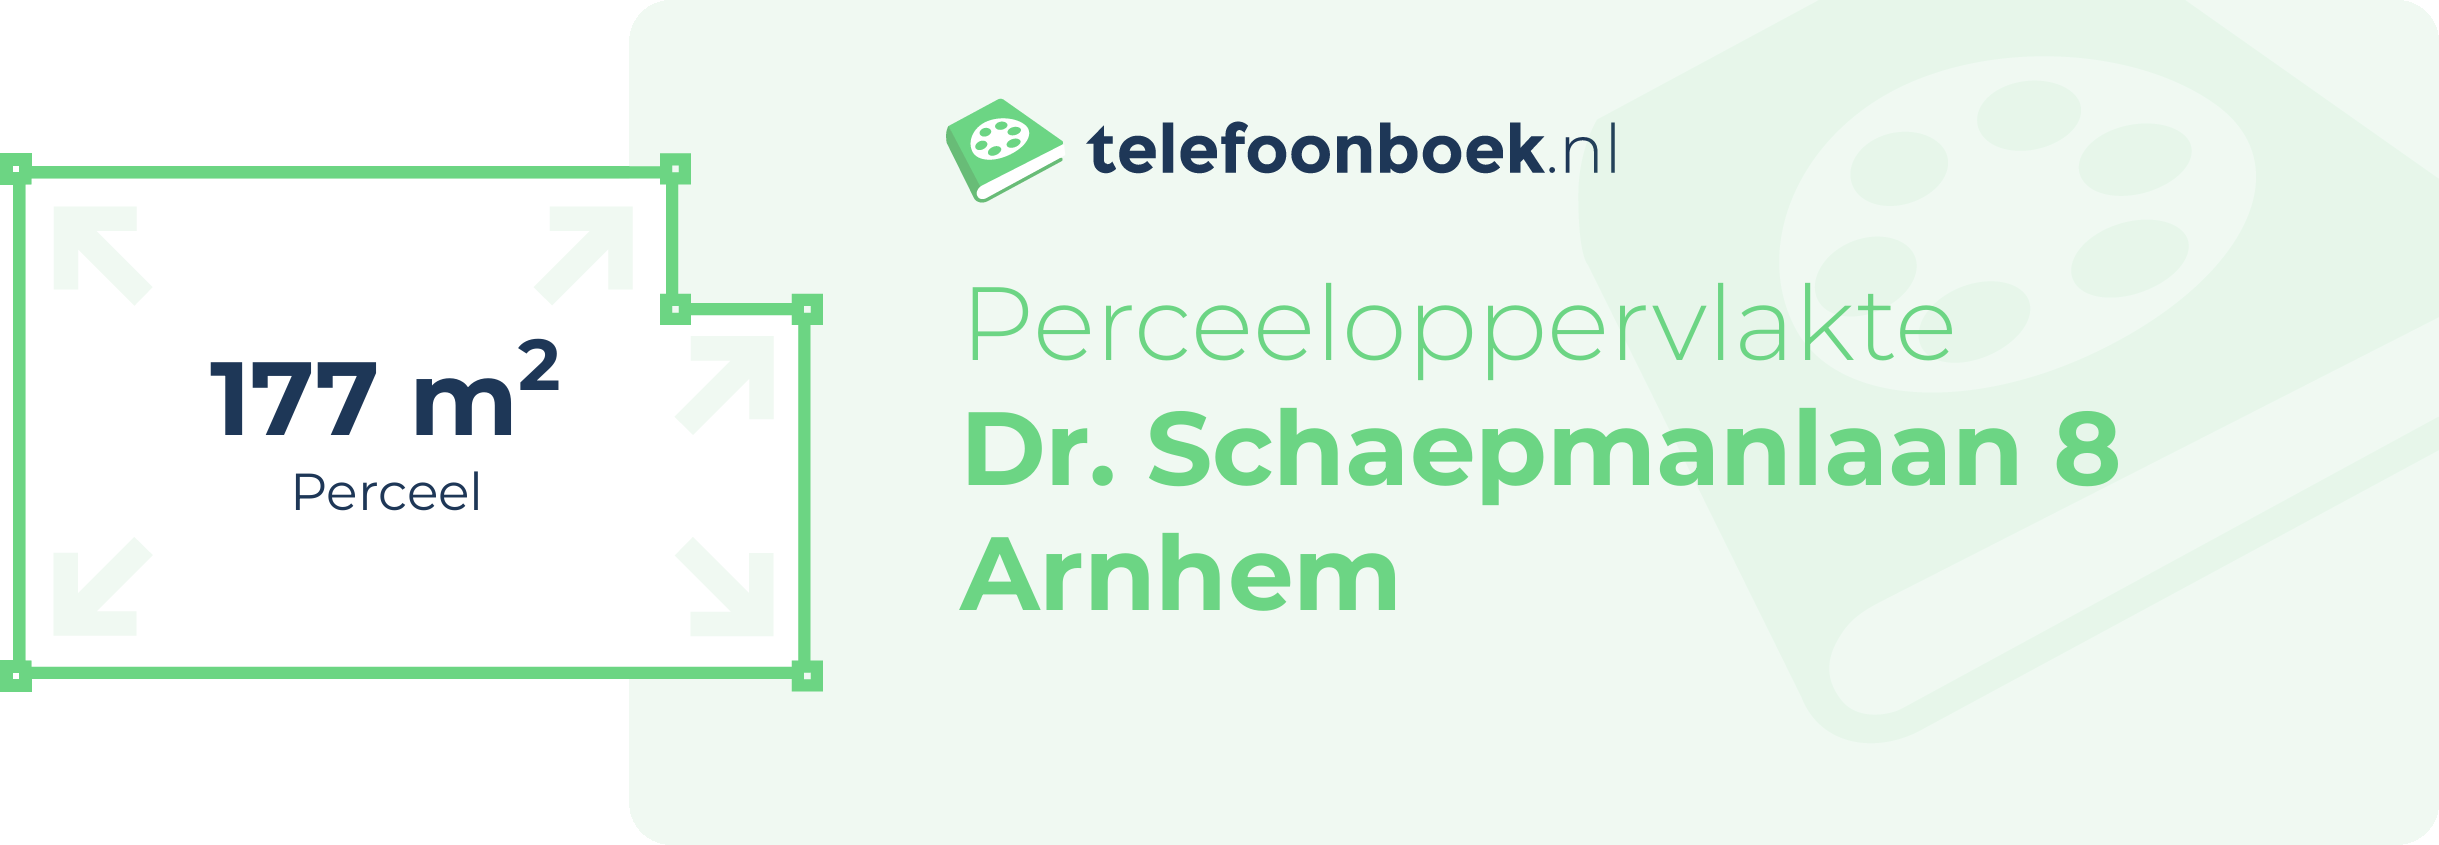 Perceeloppervlakte Dr. Schaepmanlaan 8 Arnhem